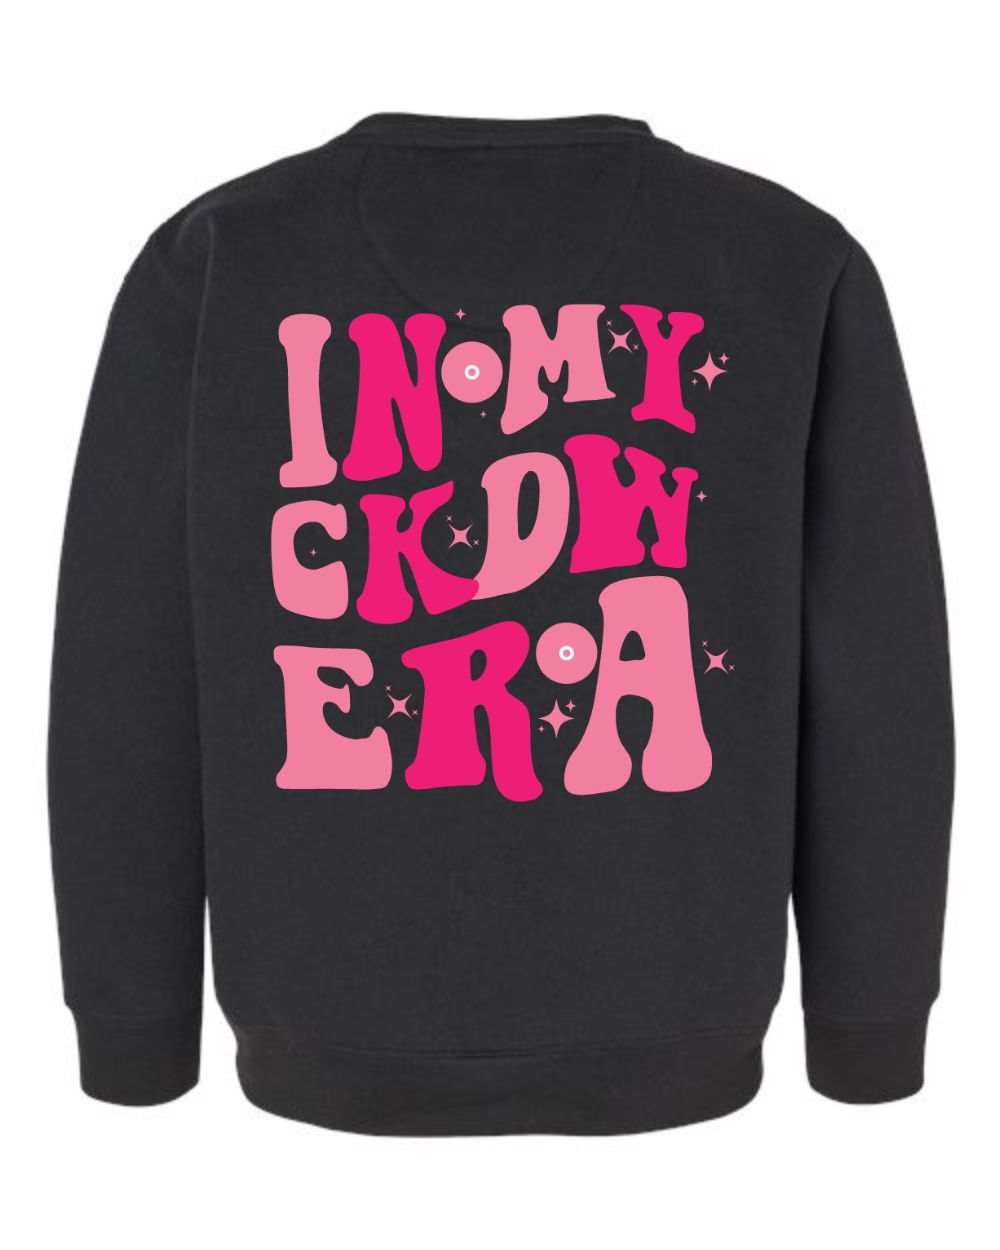 CKDW Era Youth Sweatshirt - EXTRAS